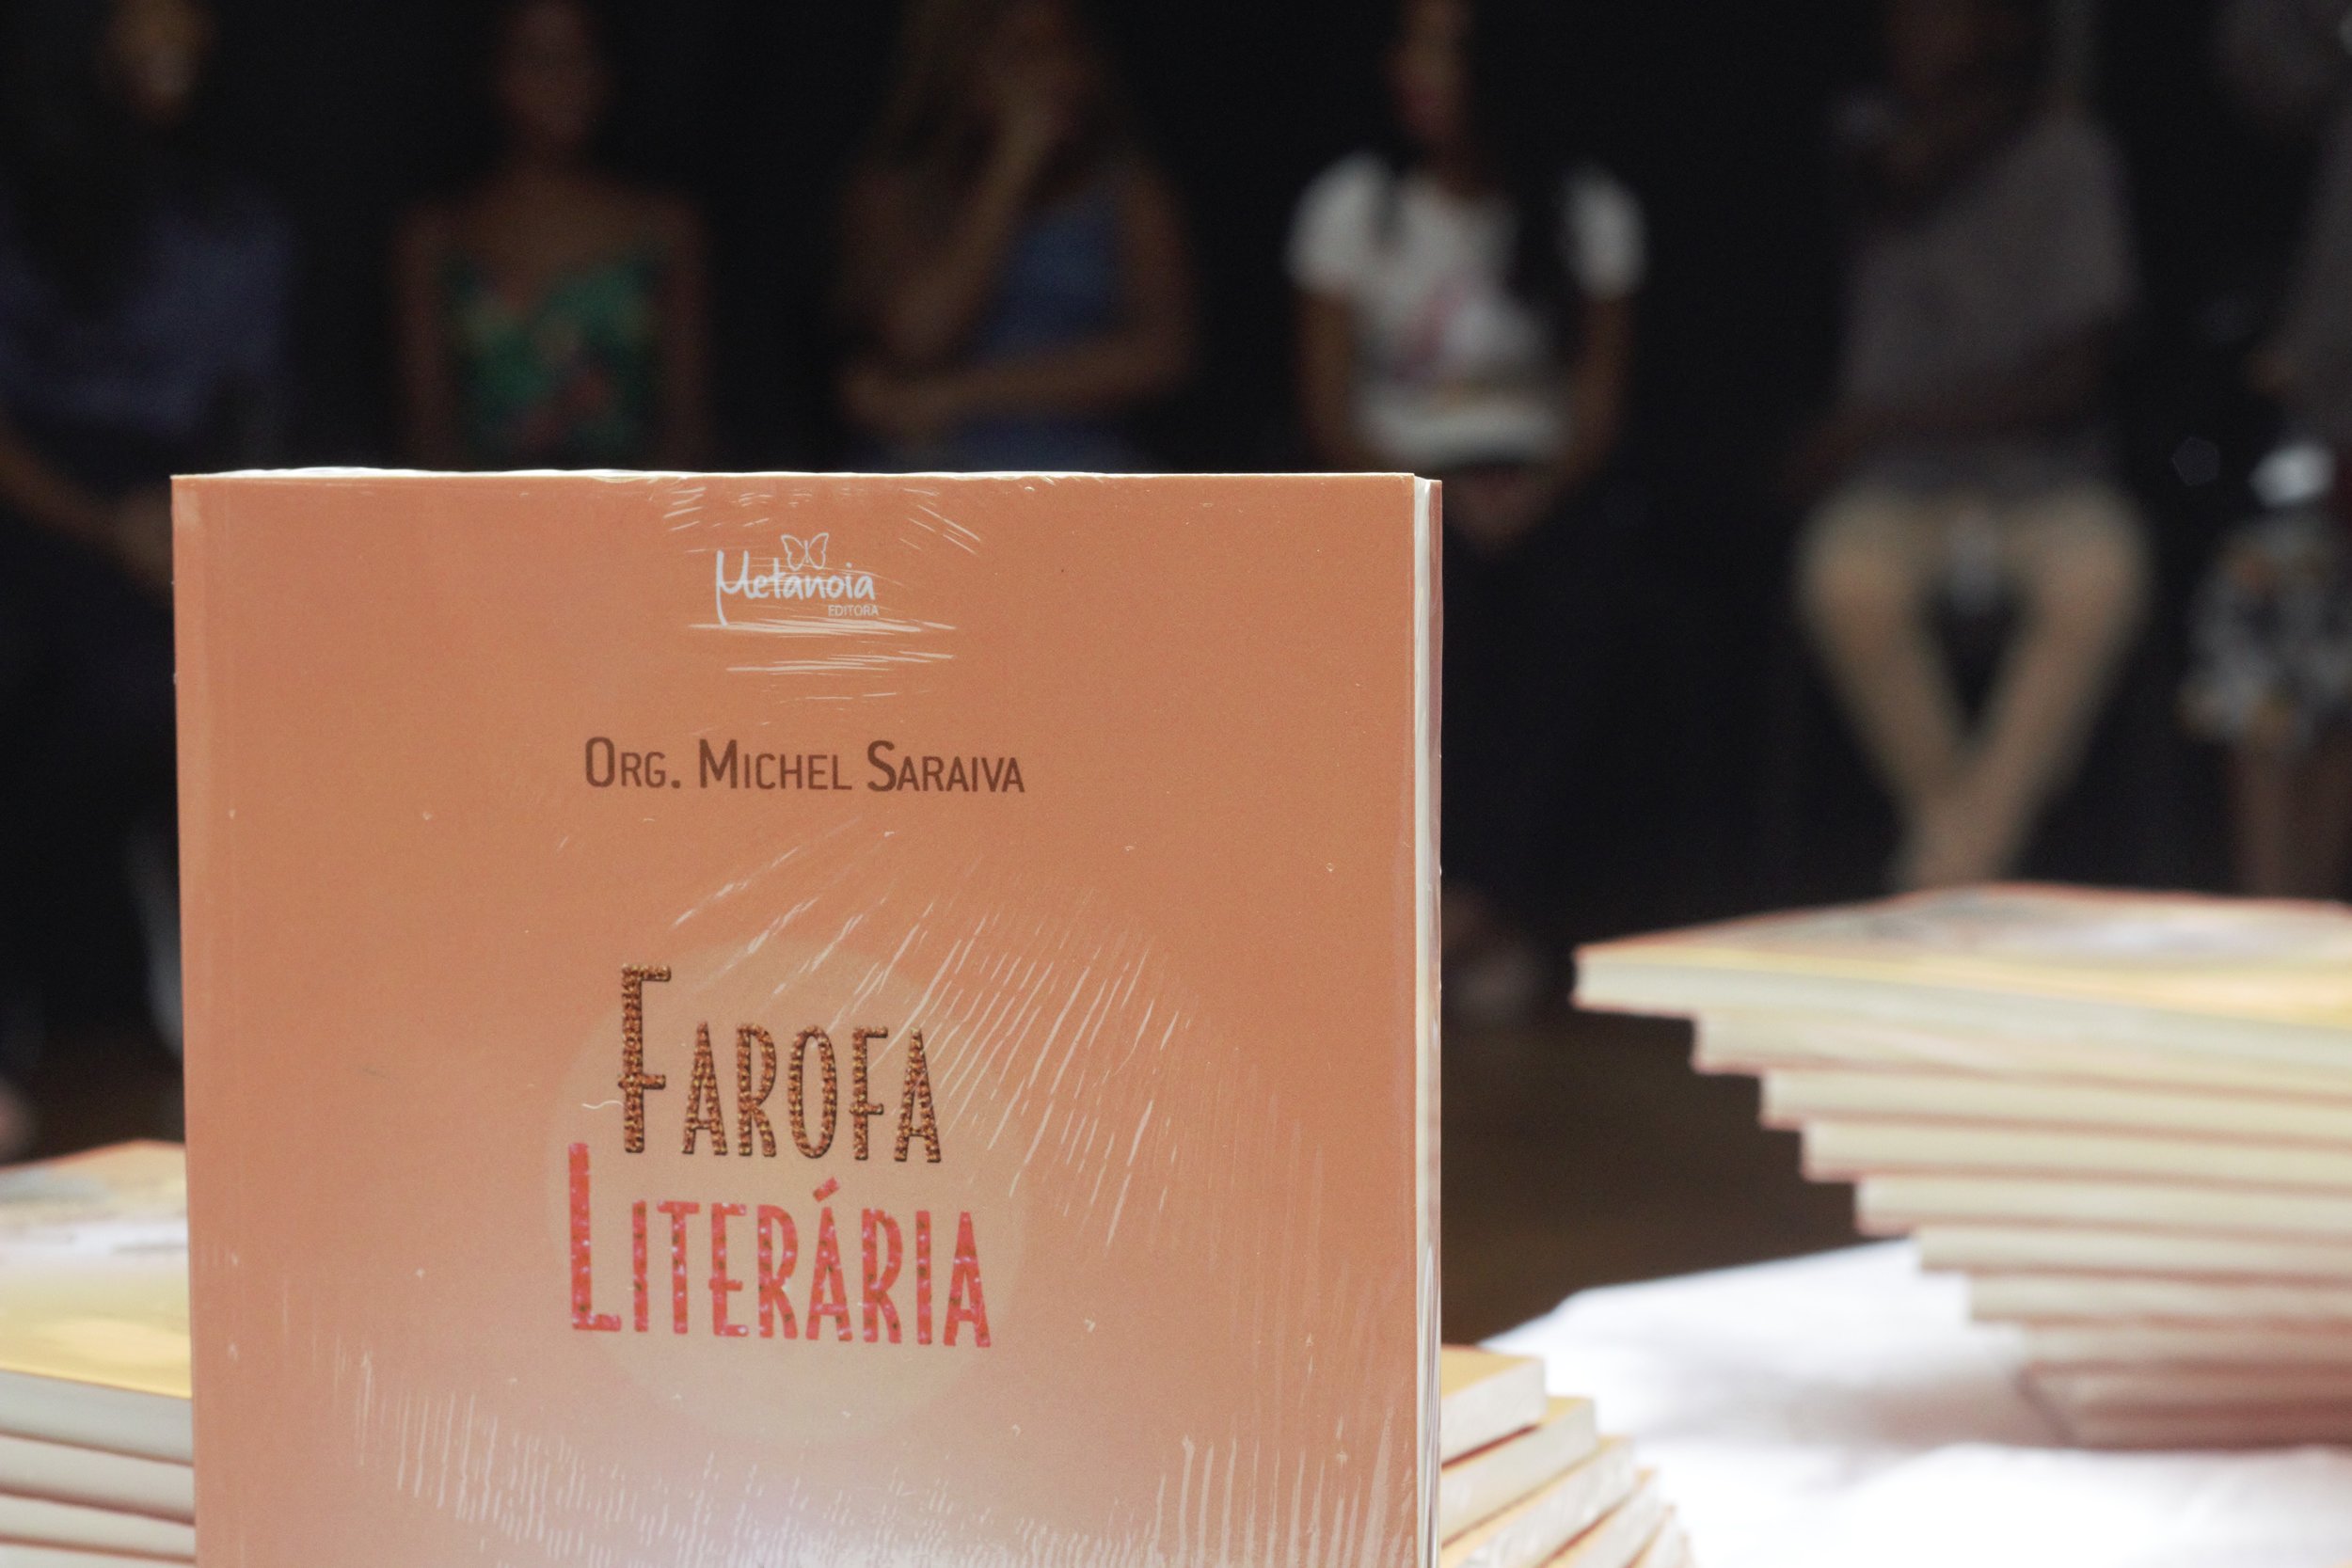 "Farofa Literária"